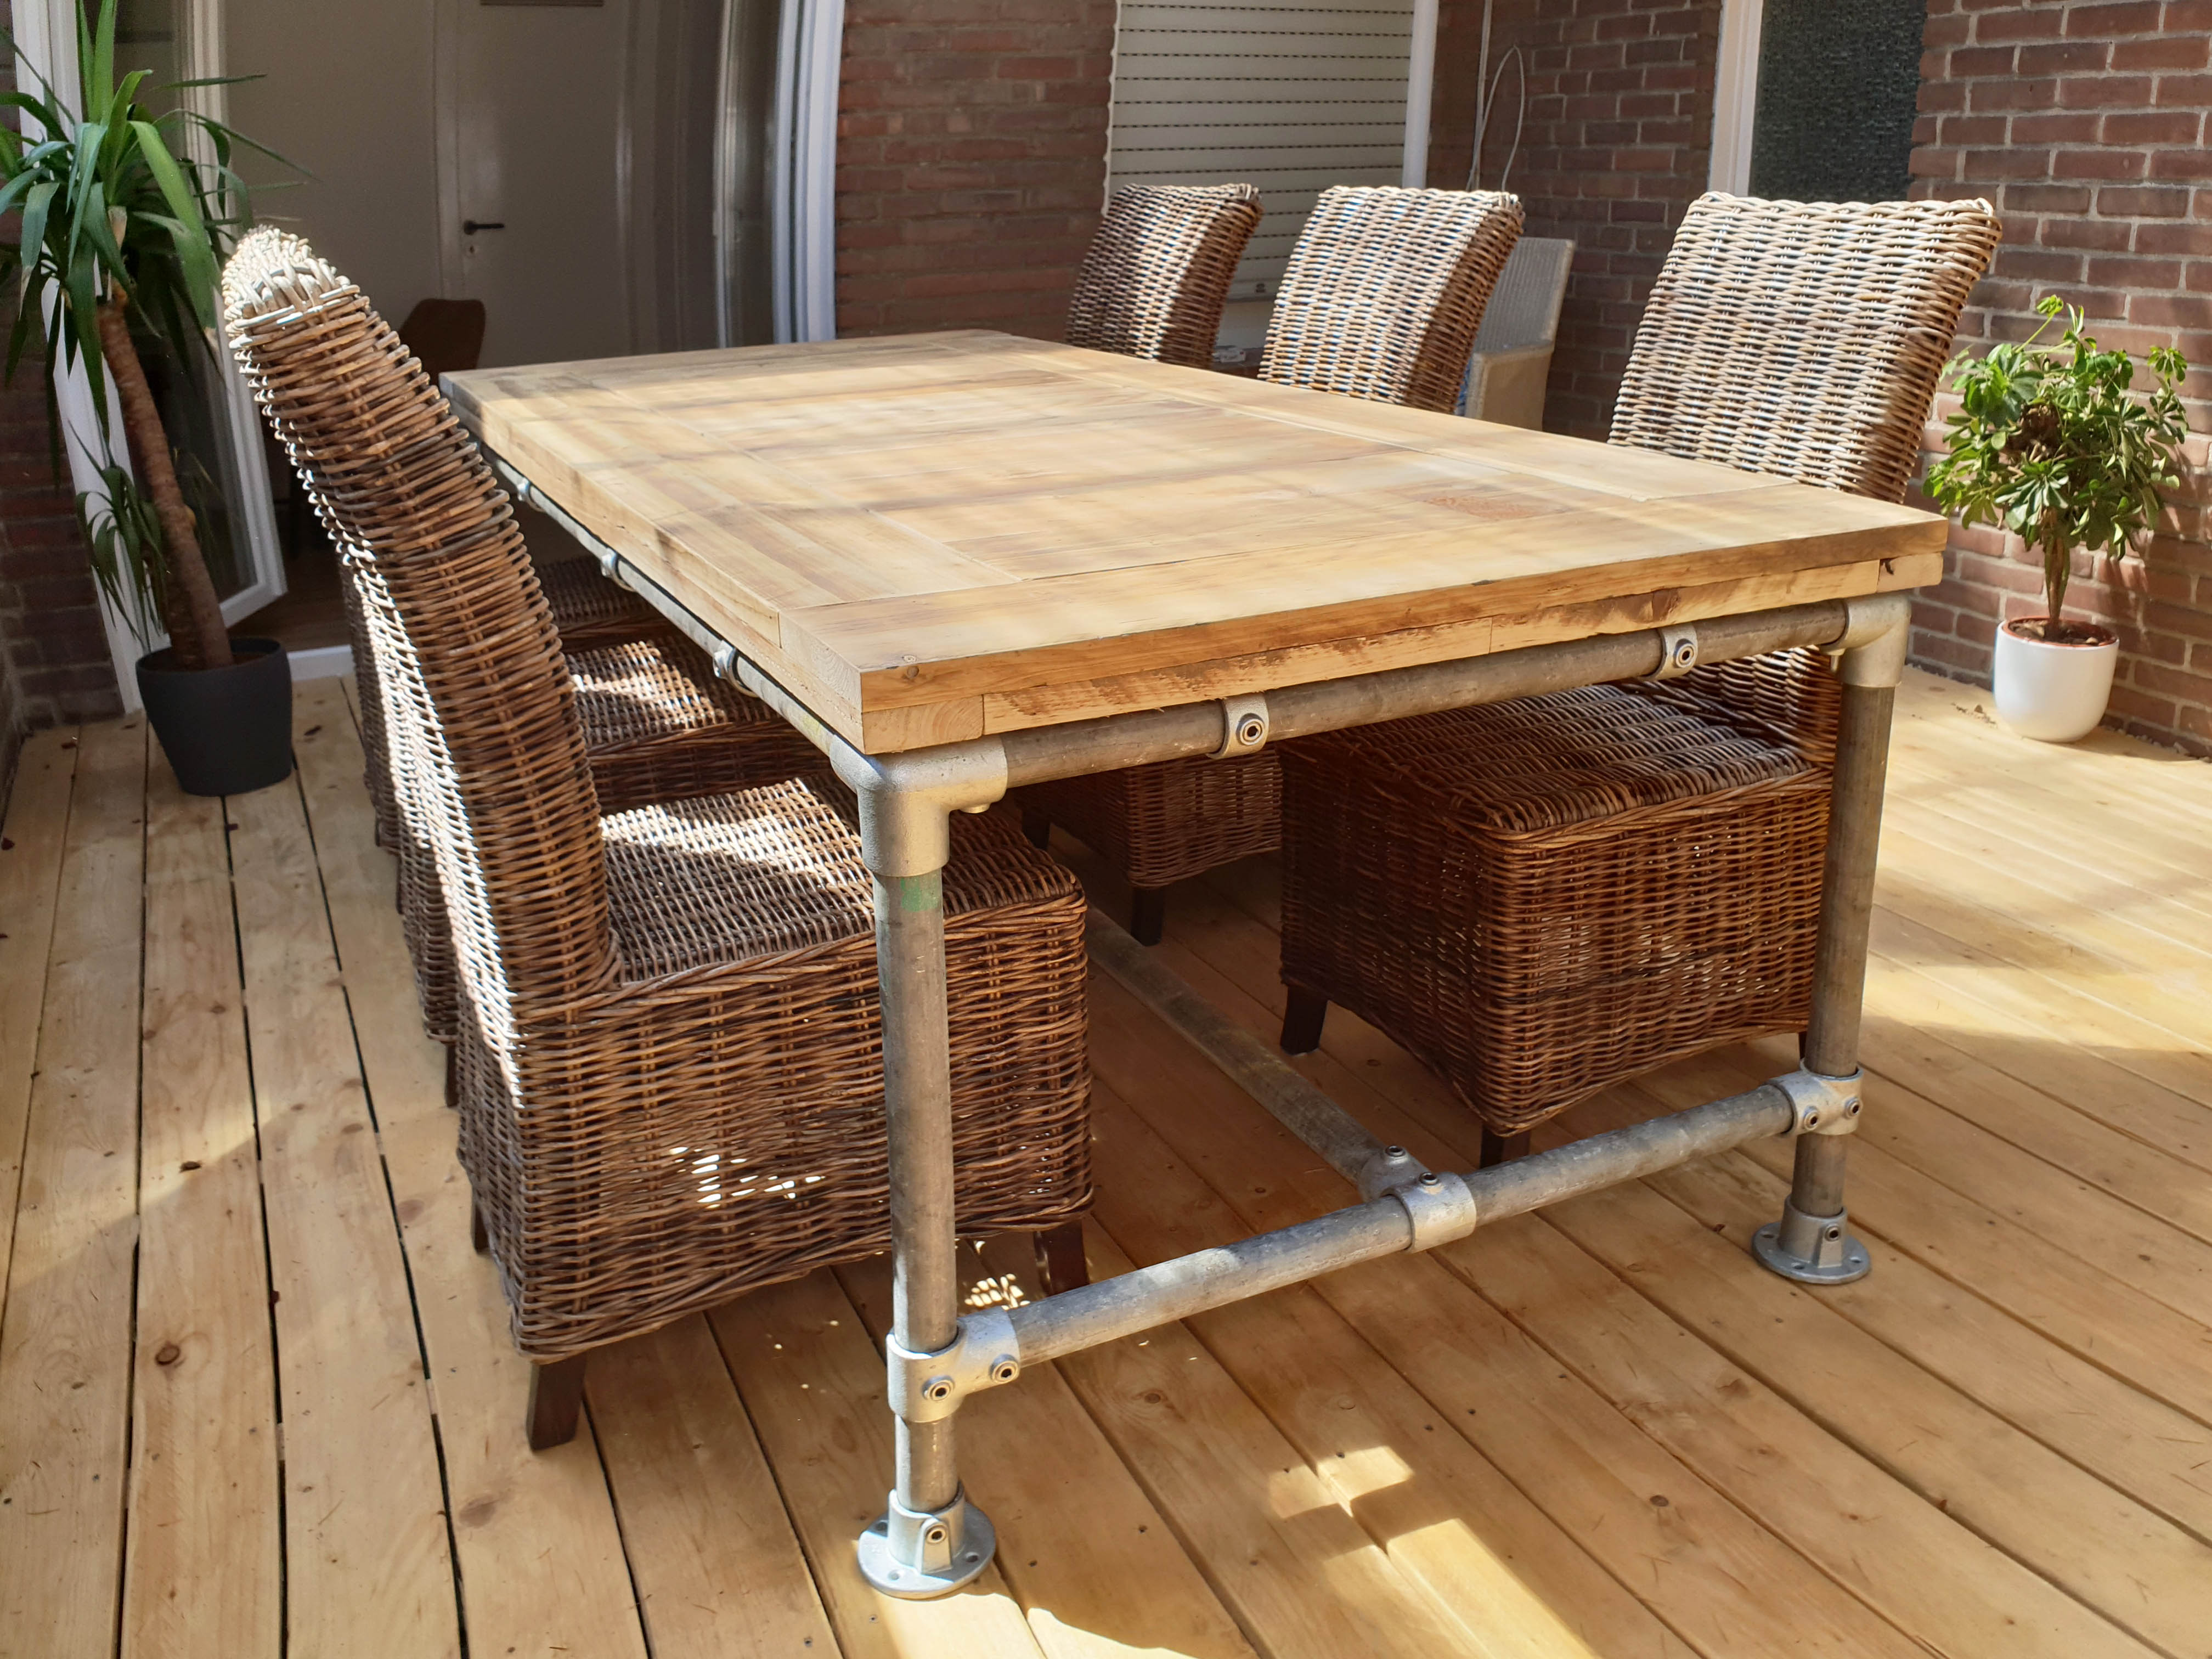 Moderne Tisch Modell TOSCANA Industrie Stil Massive Esstisch Gerüst Holz Steigerhout Loft Vintage Ga